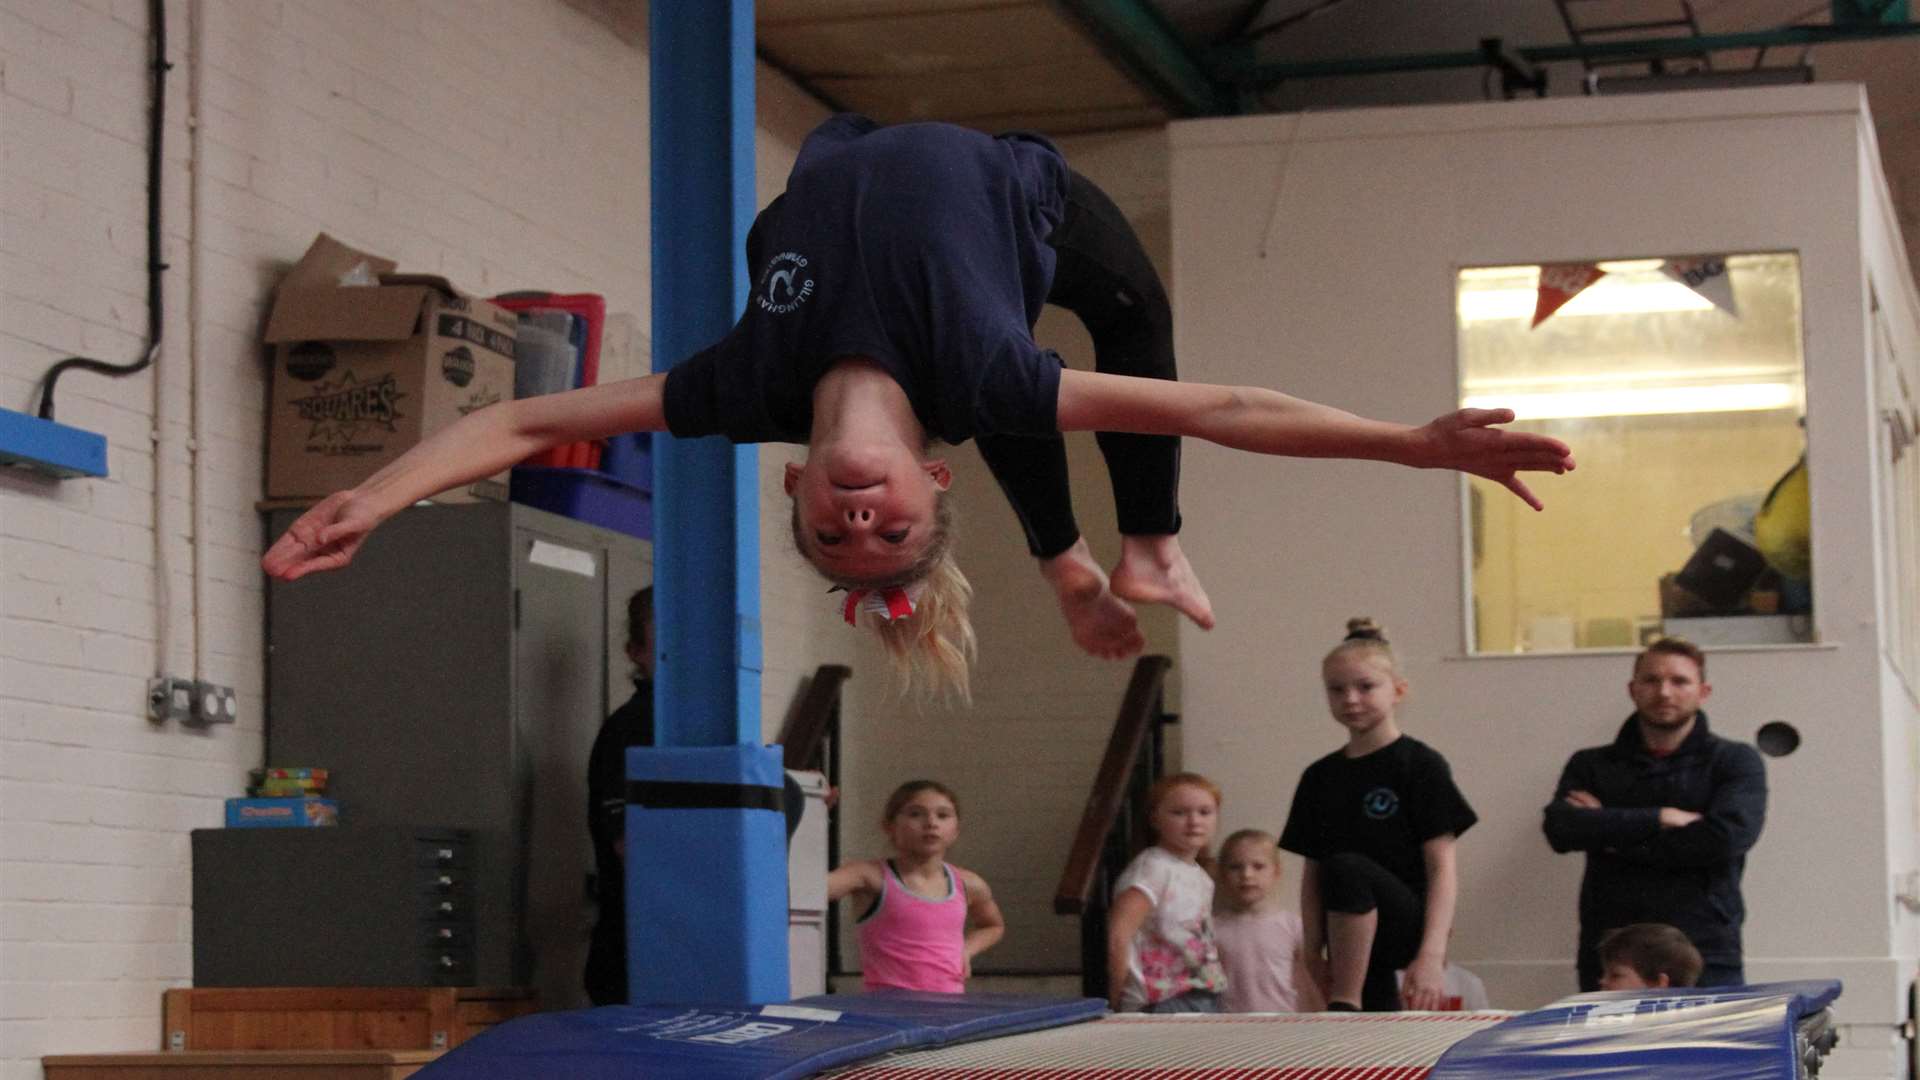 Gillingham Gymnastics Club member Olwen Noble, 14